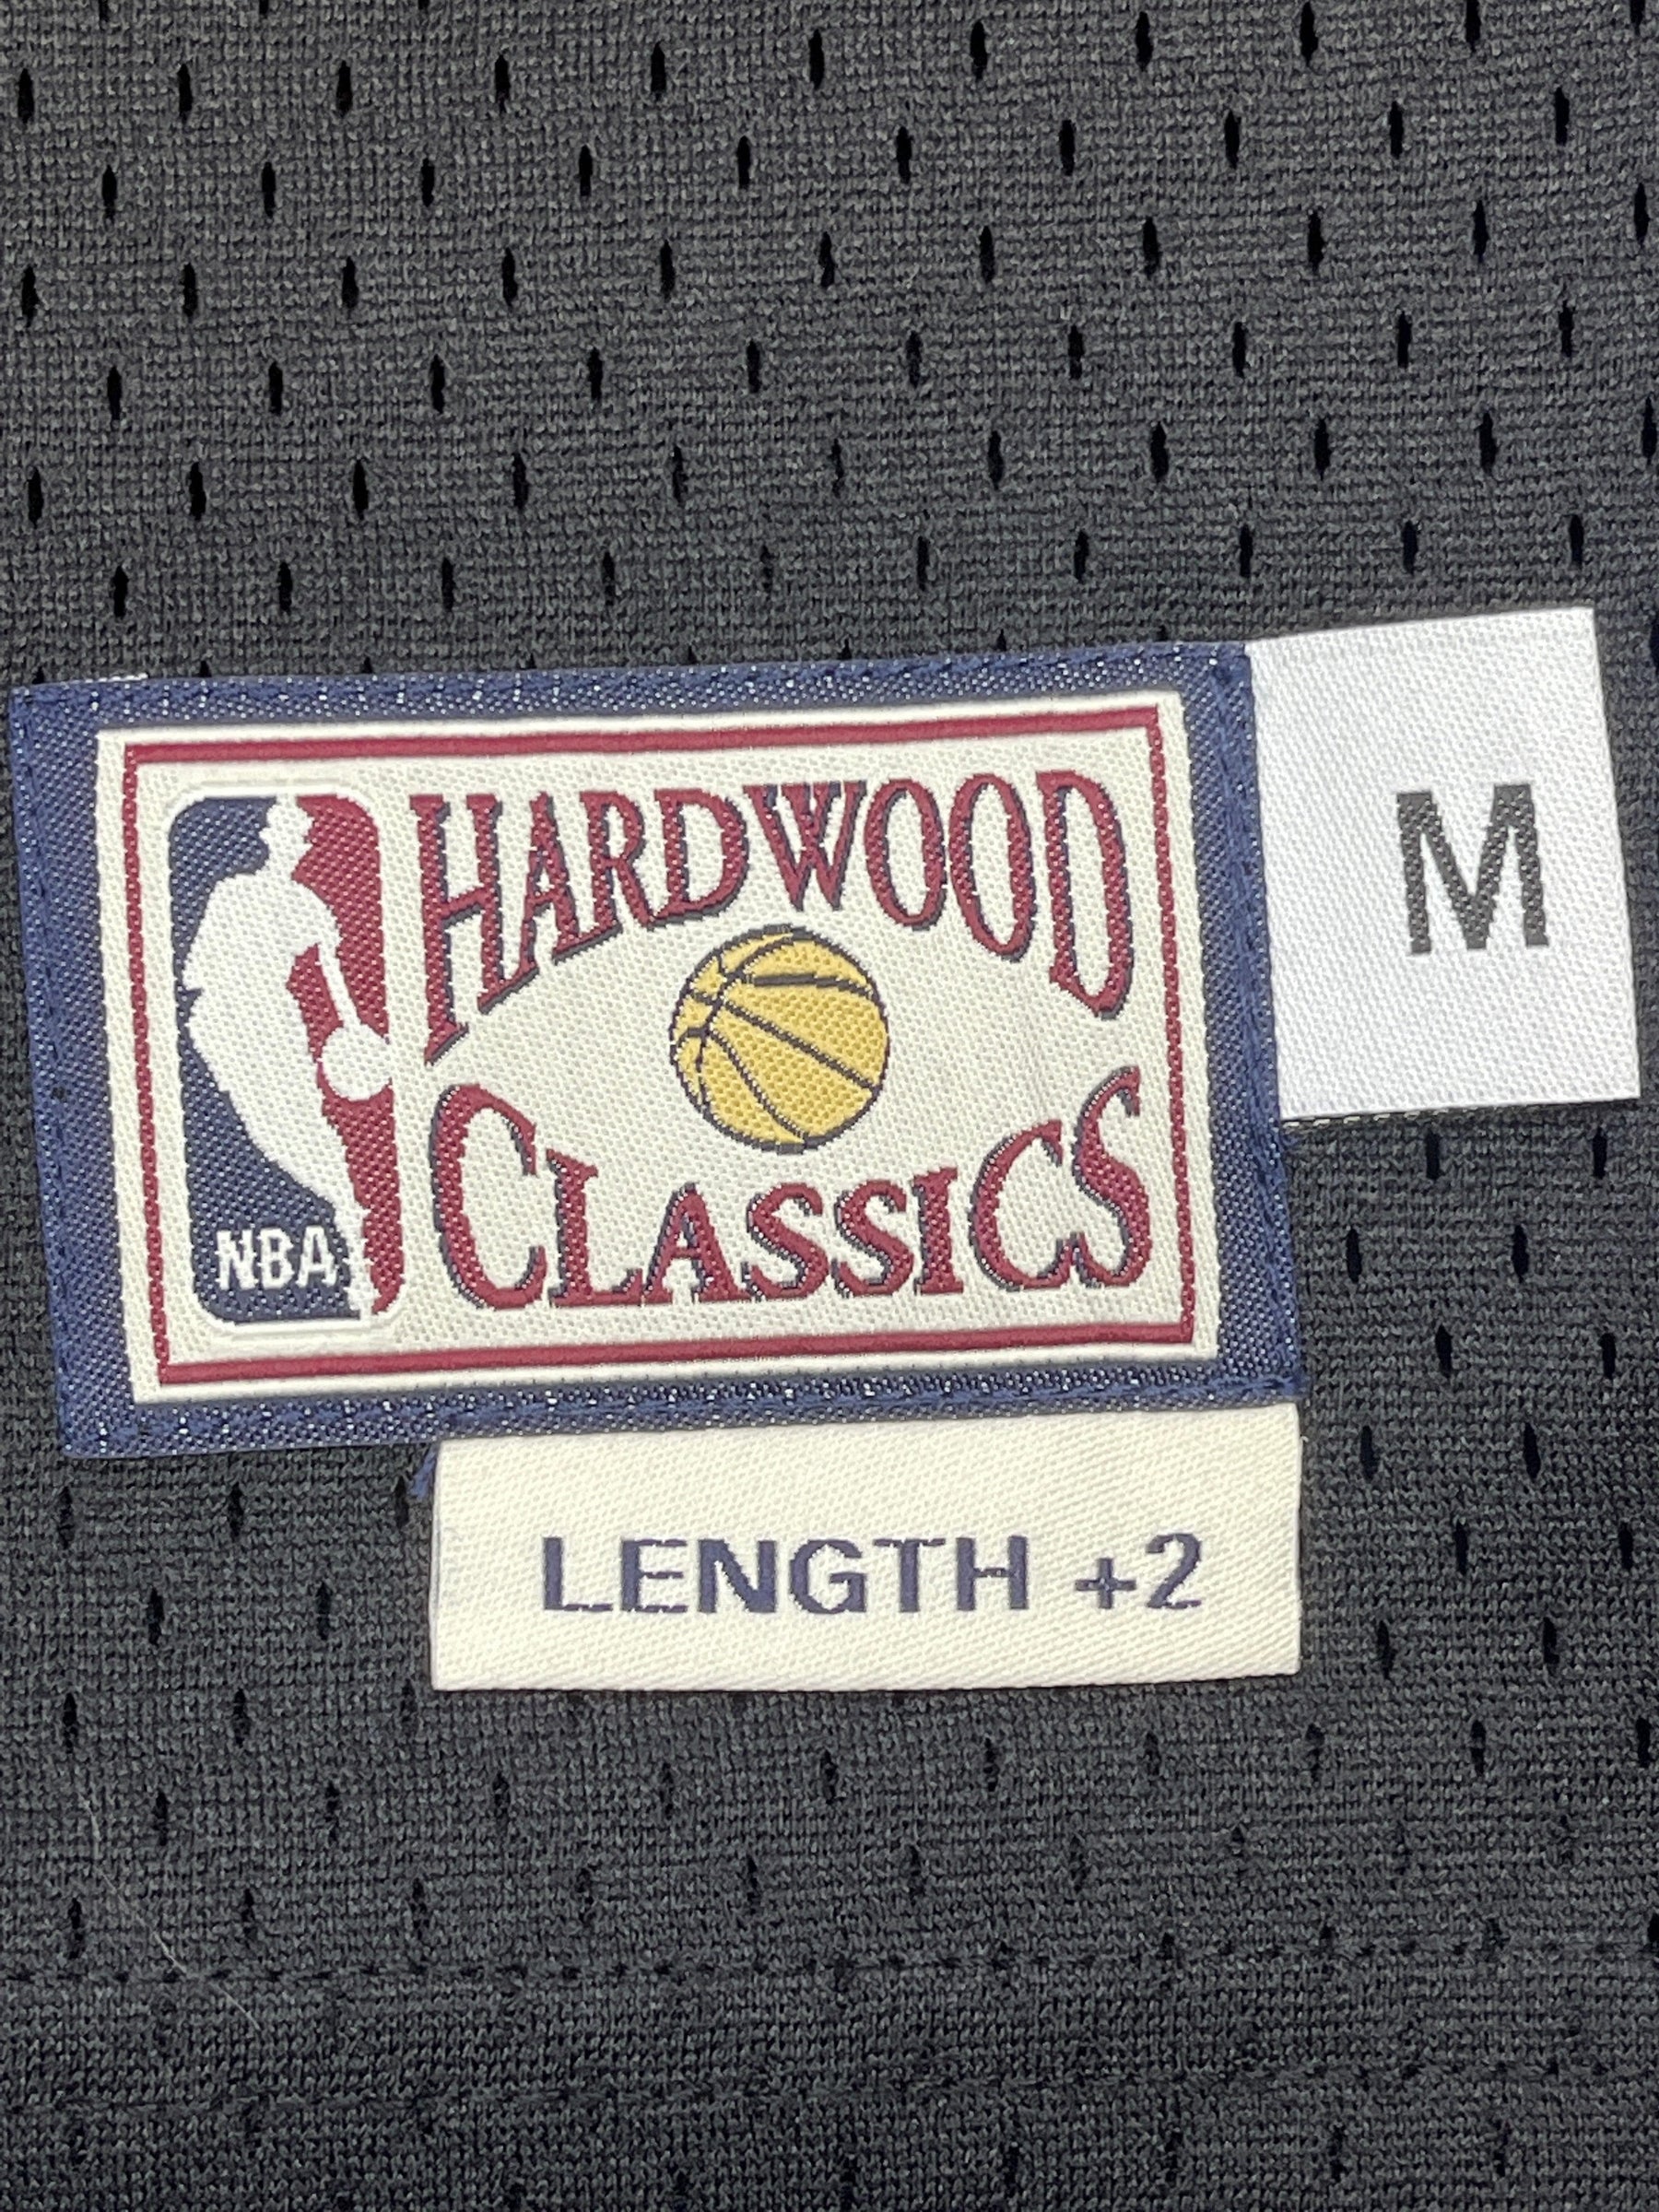 NBA Philadelphia 76ers Allen Iverson #3 Adidas Hardwood Classics Retro Stitched Jersey Men's Medium NWT